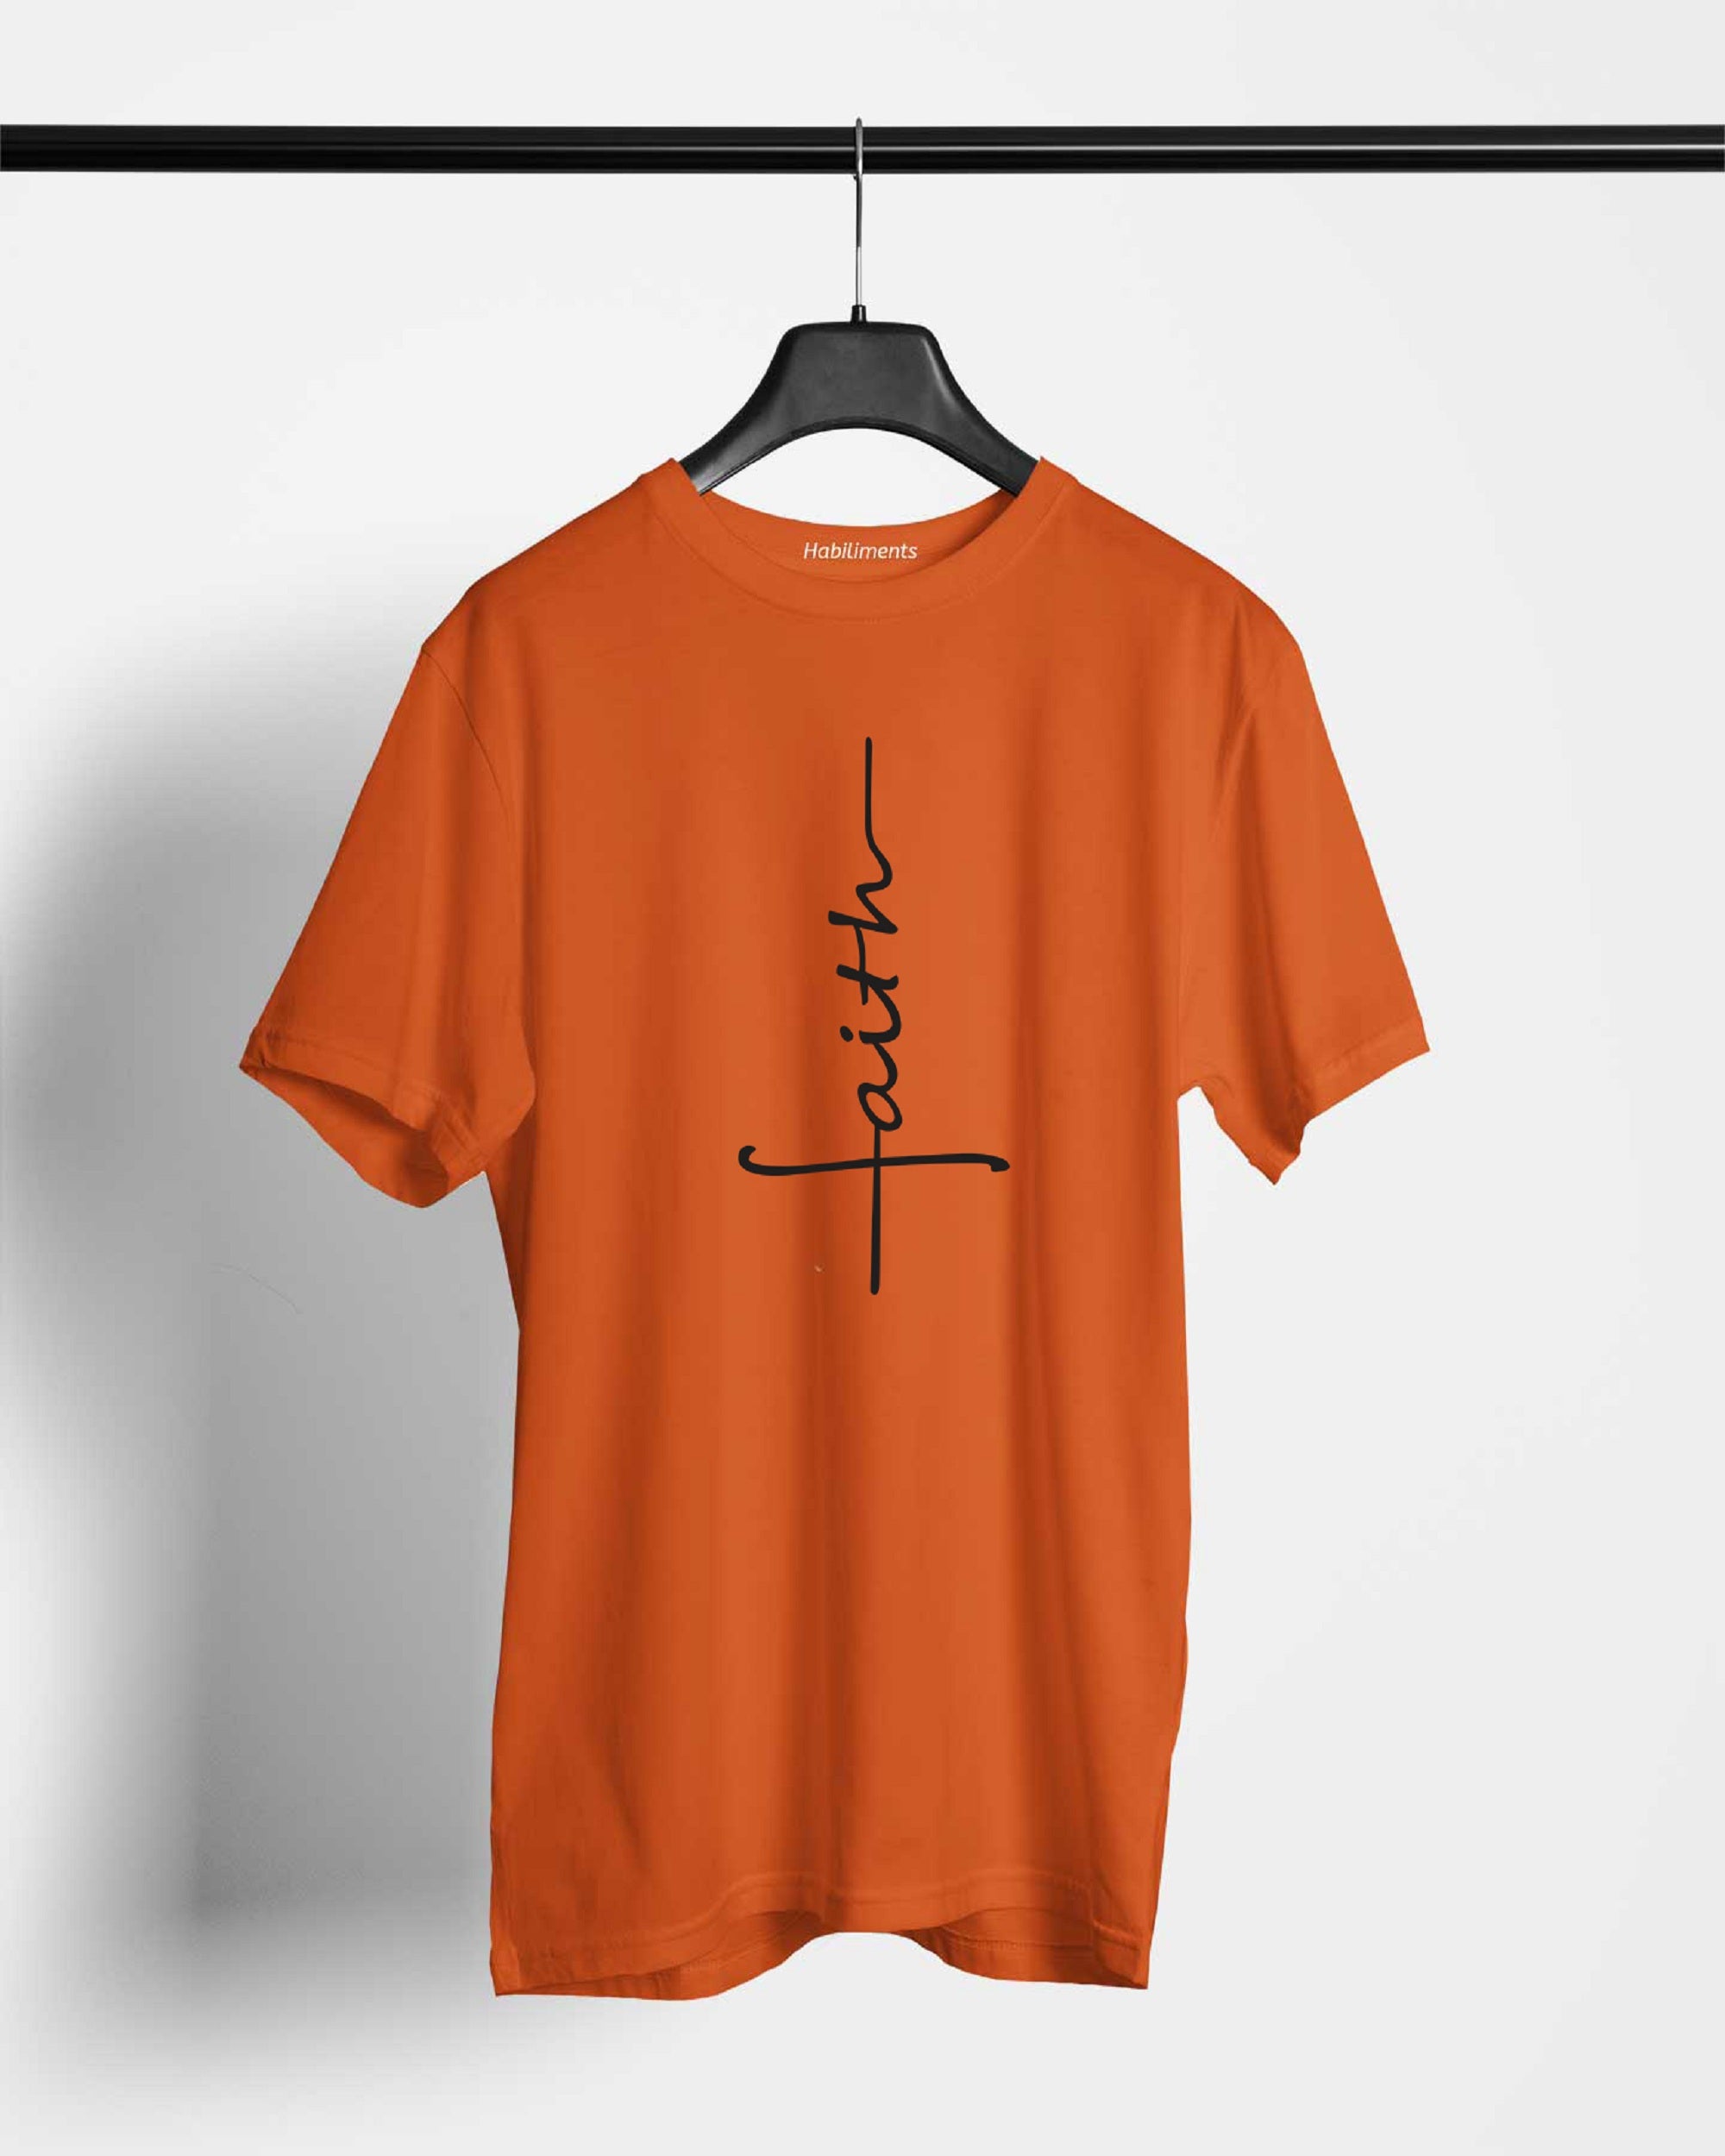 Faith T-Shirts For Men || Rust || Stylish Tshirts || 100% Cotton || Best T-Shirt For Men's